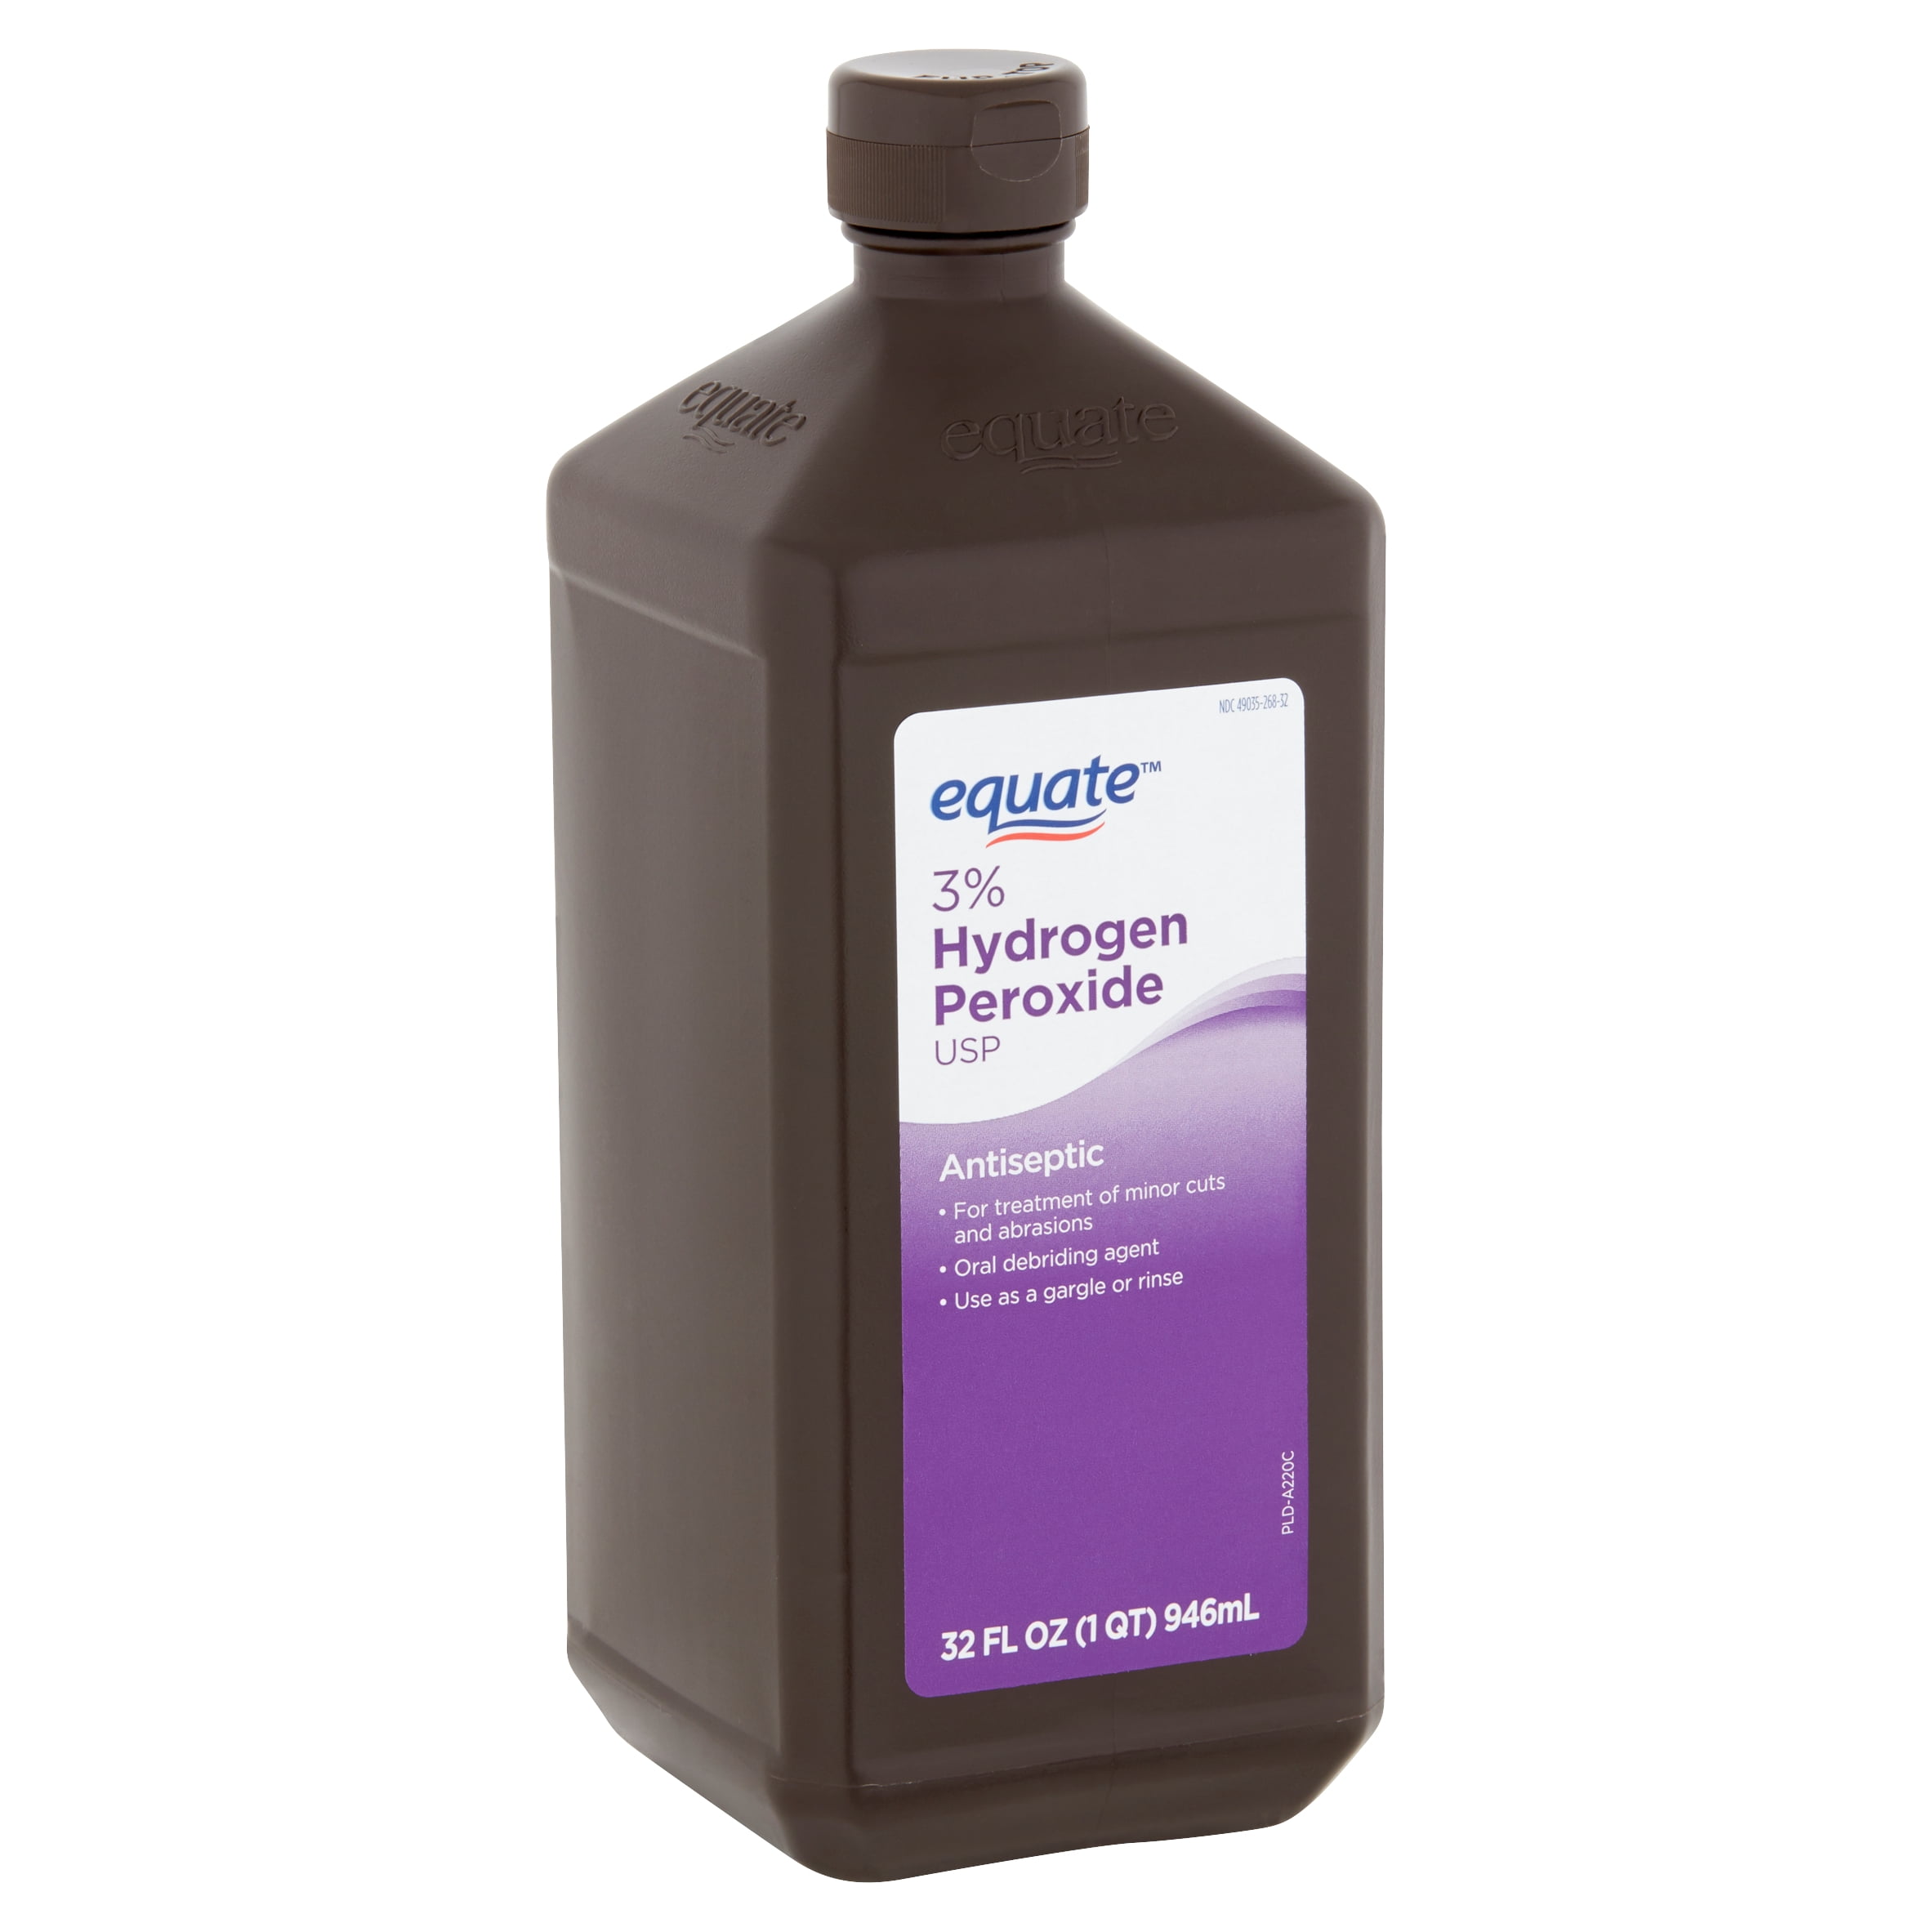 Equate 3% Hydrogen Peroxide USP Antiseptic, 32 fl oz - Walmart.com